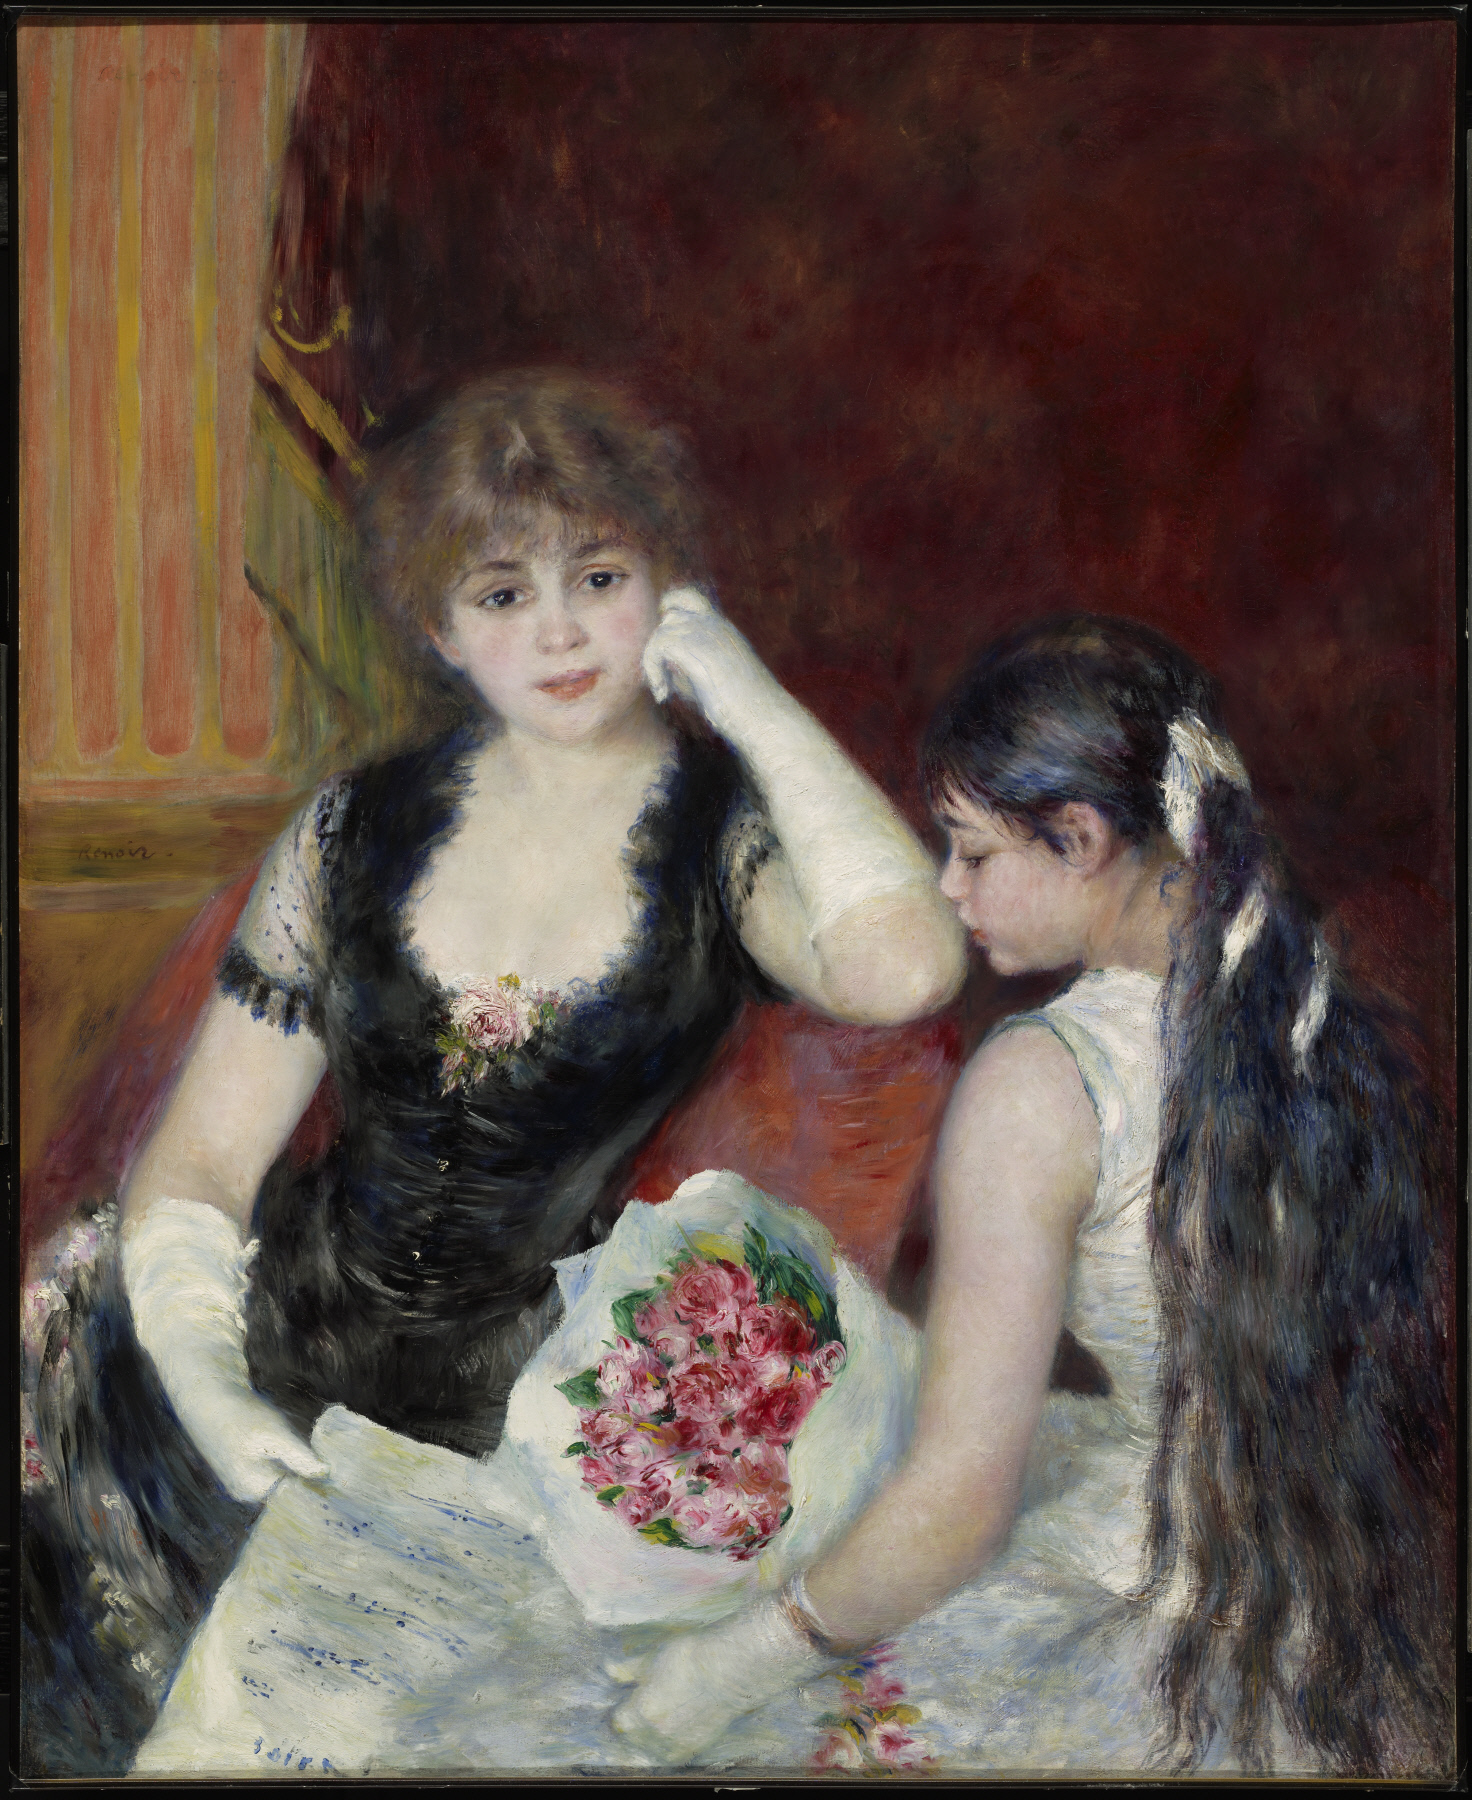 Un palchetto a teatro (Al concerto) by Pierre-Auguste Renoir - 1880 - 99.4 x 80.7 cm The Clark